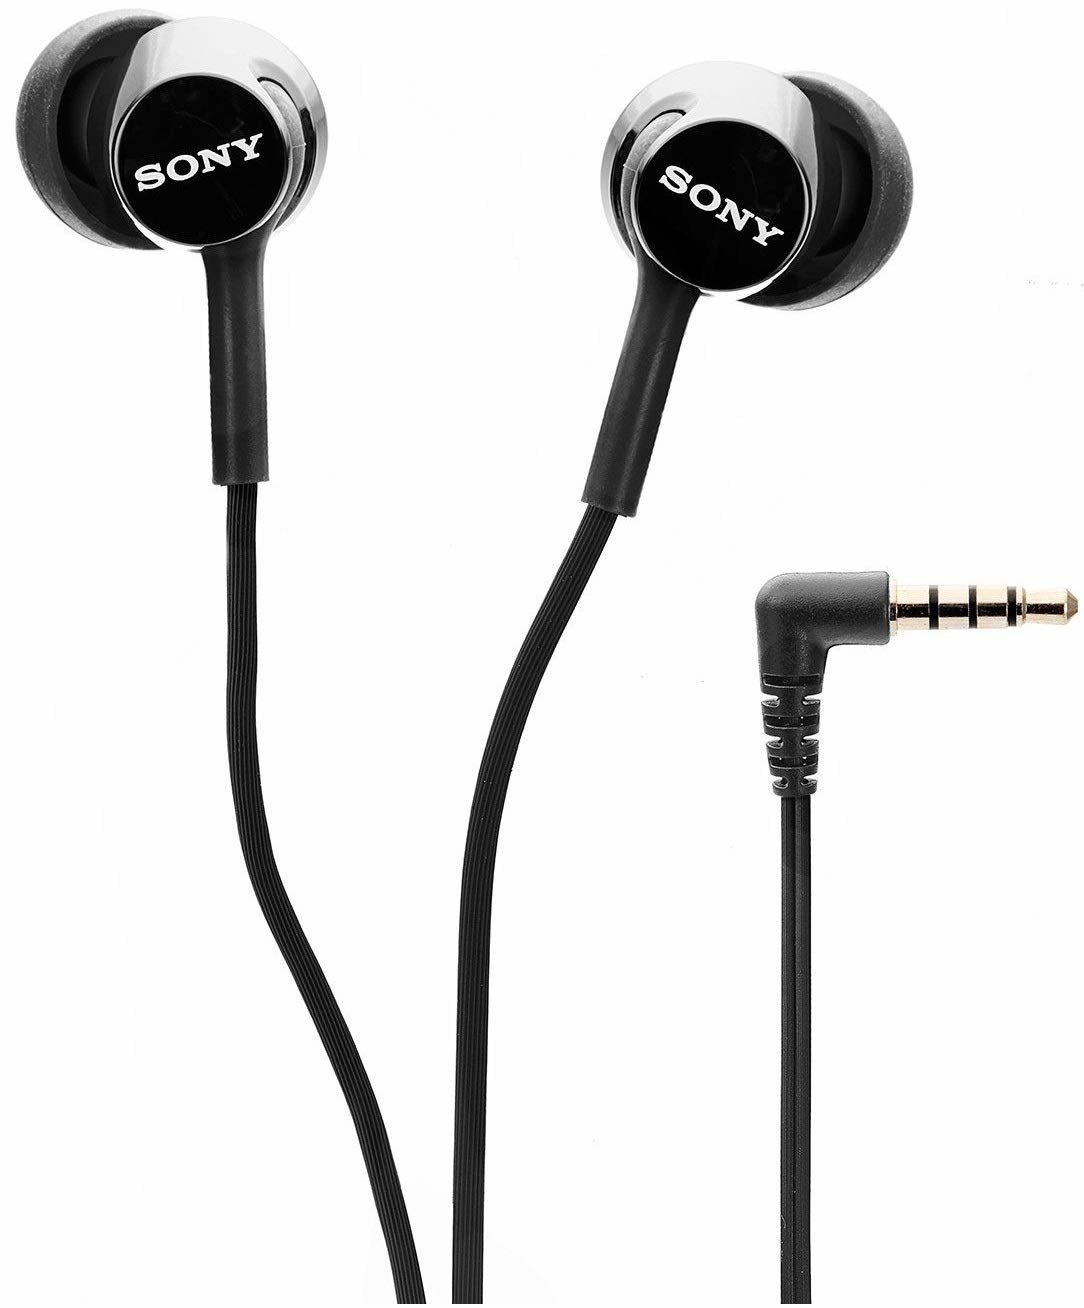 A pair of Sony earphones 